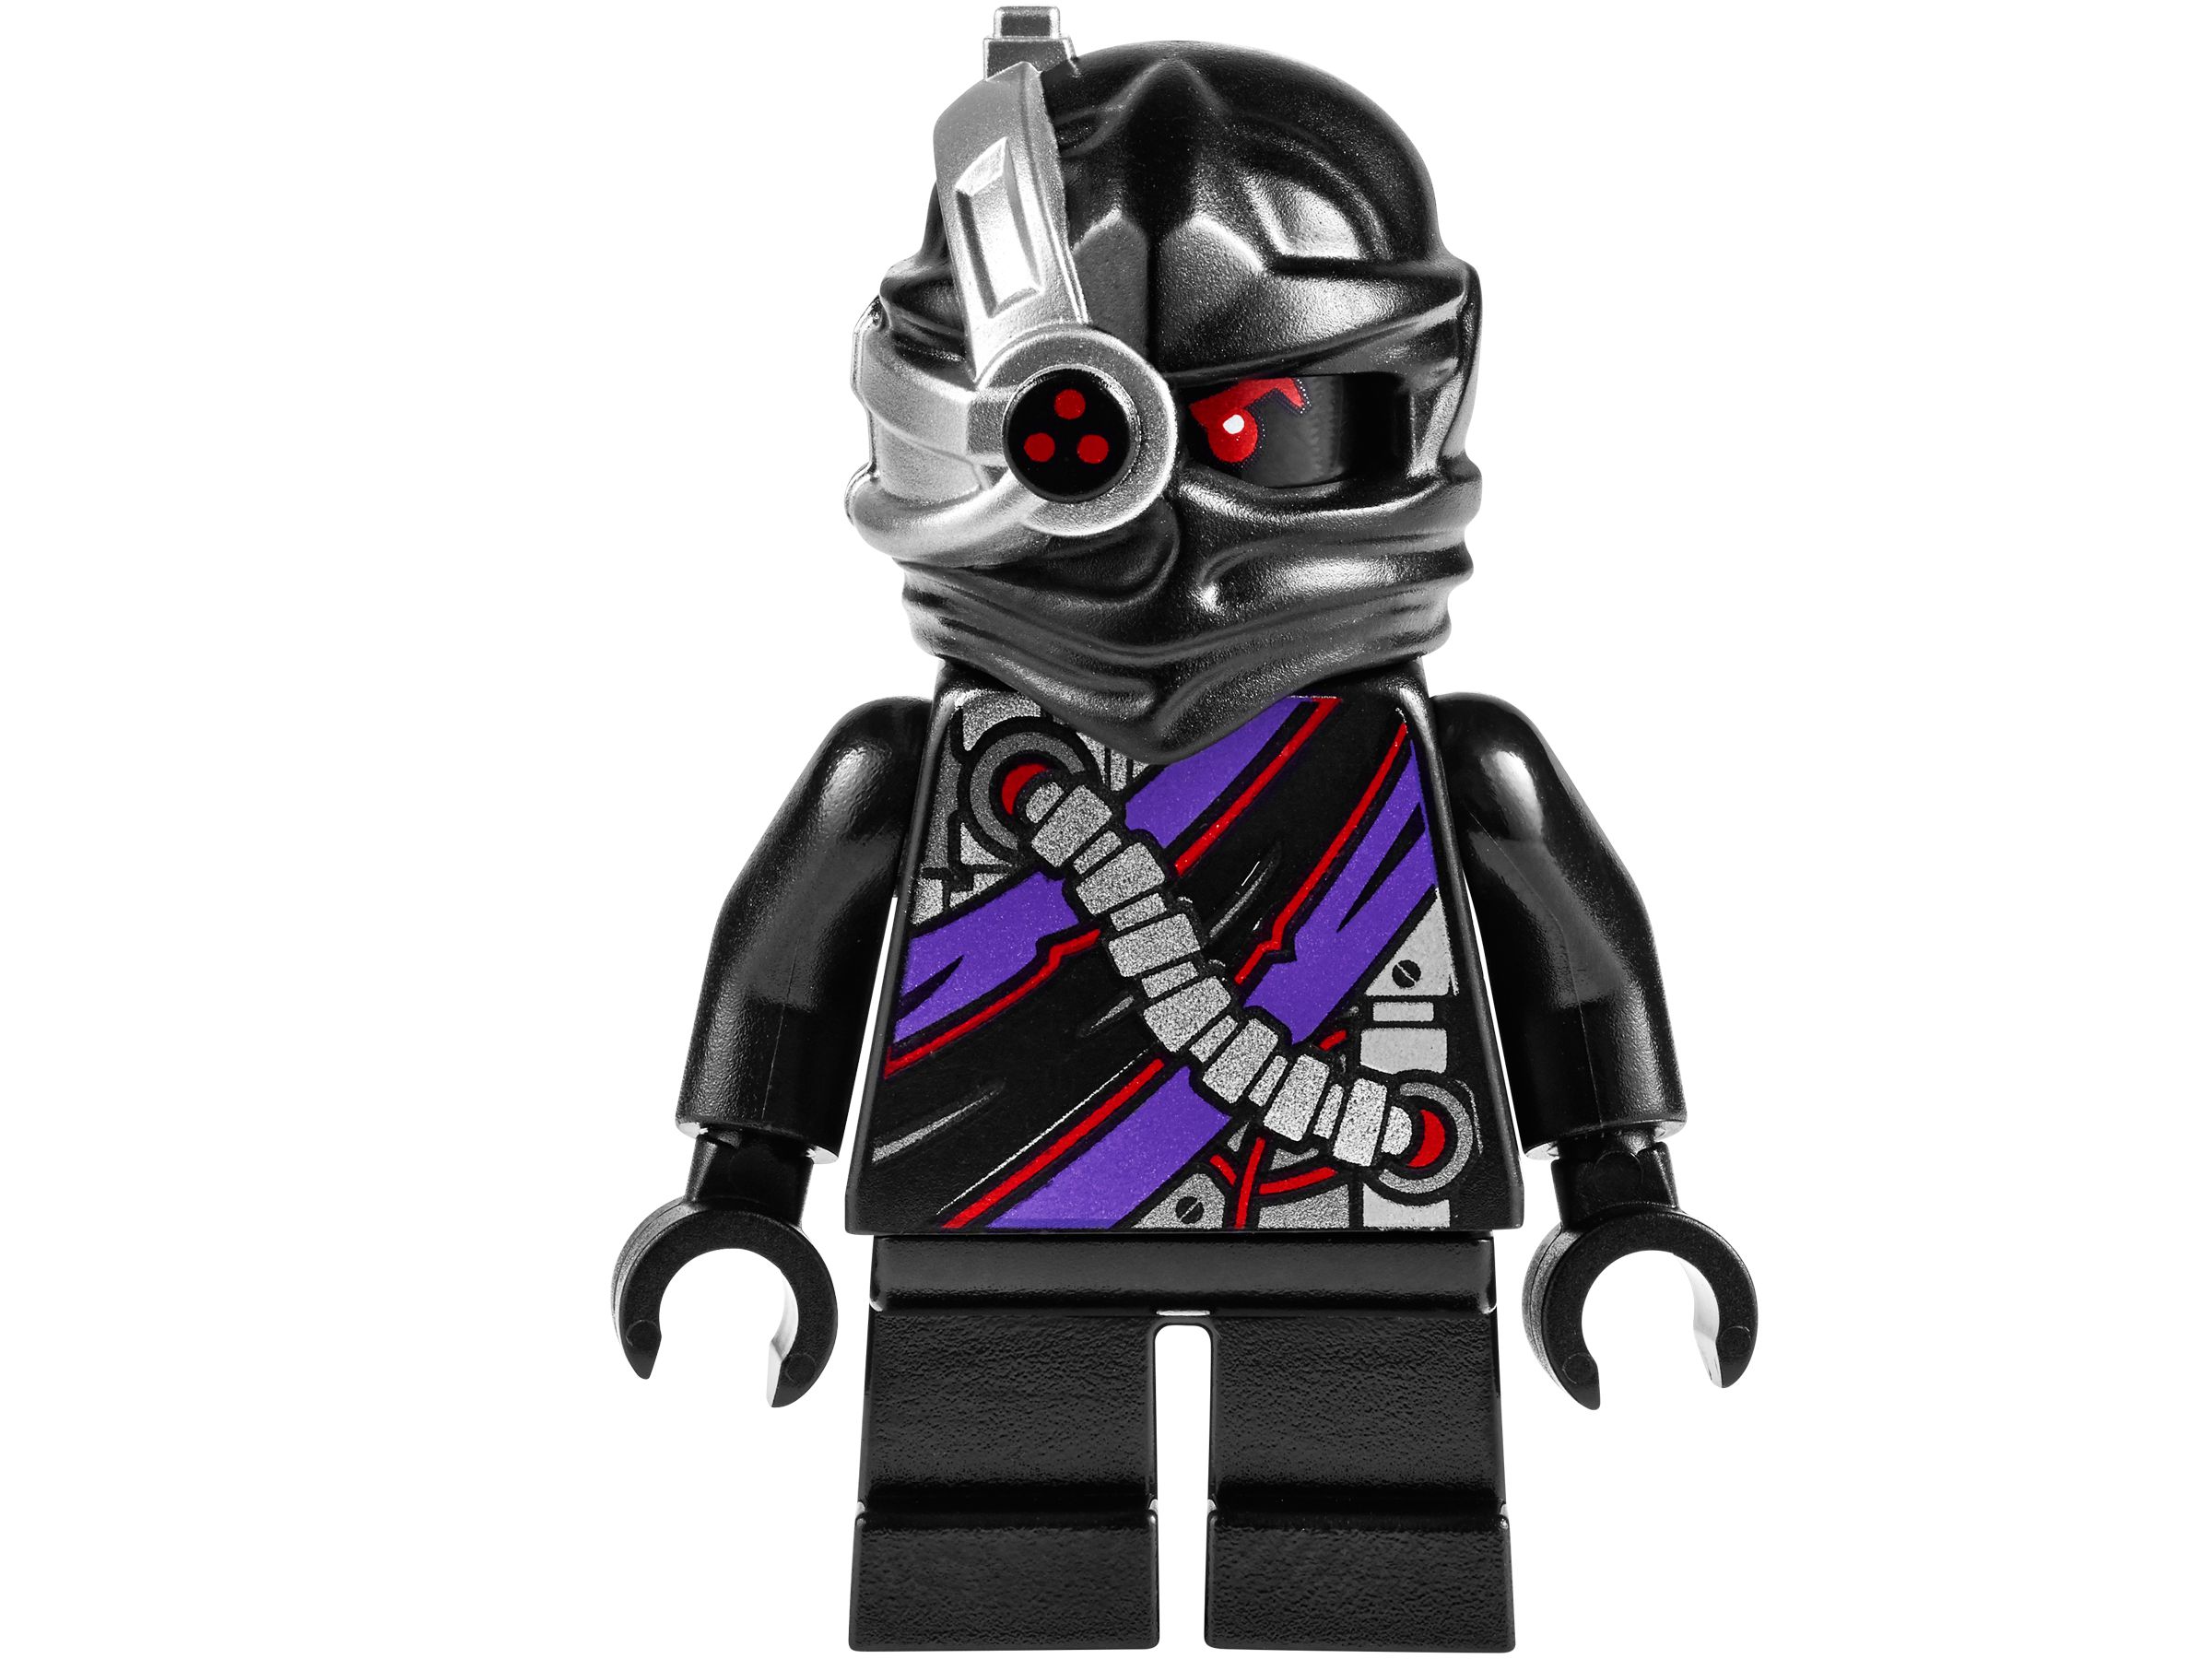 Technoklinge 70726 *Neu* Lego® Ninjago Figur Zane inkl 